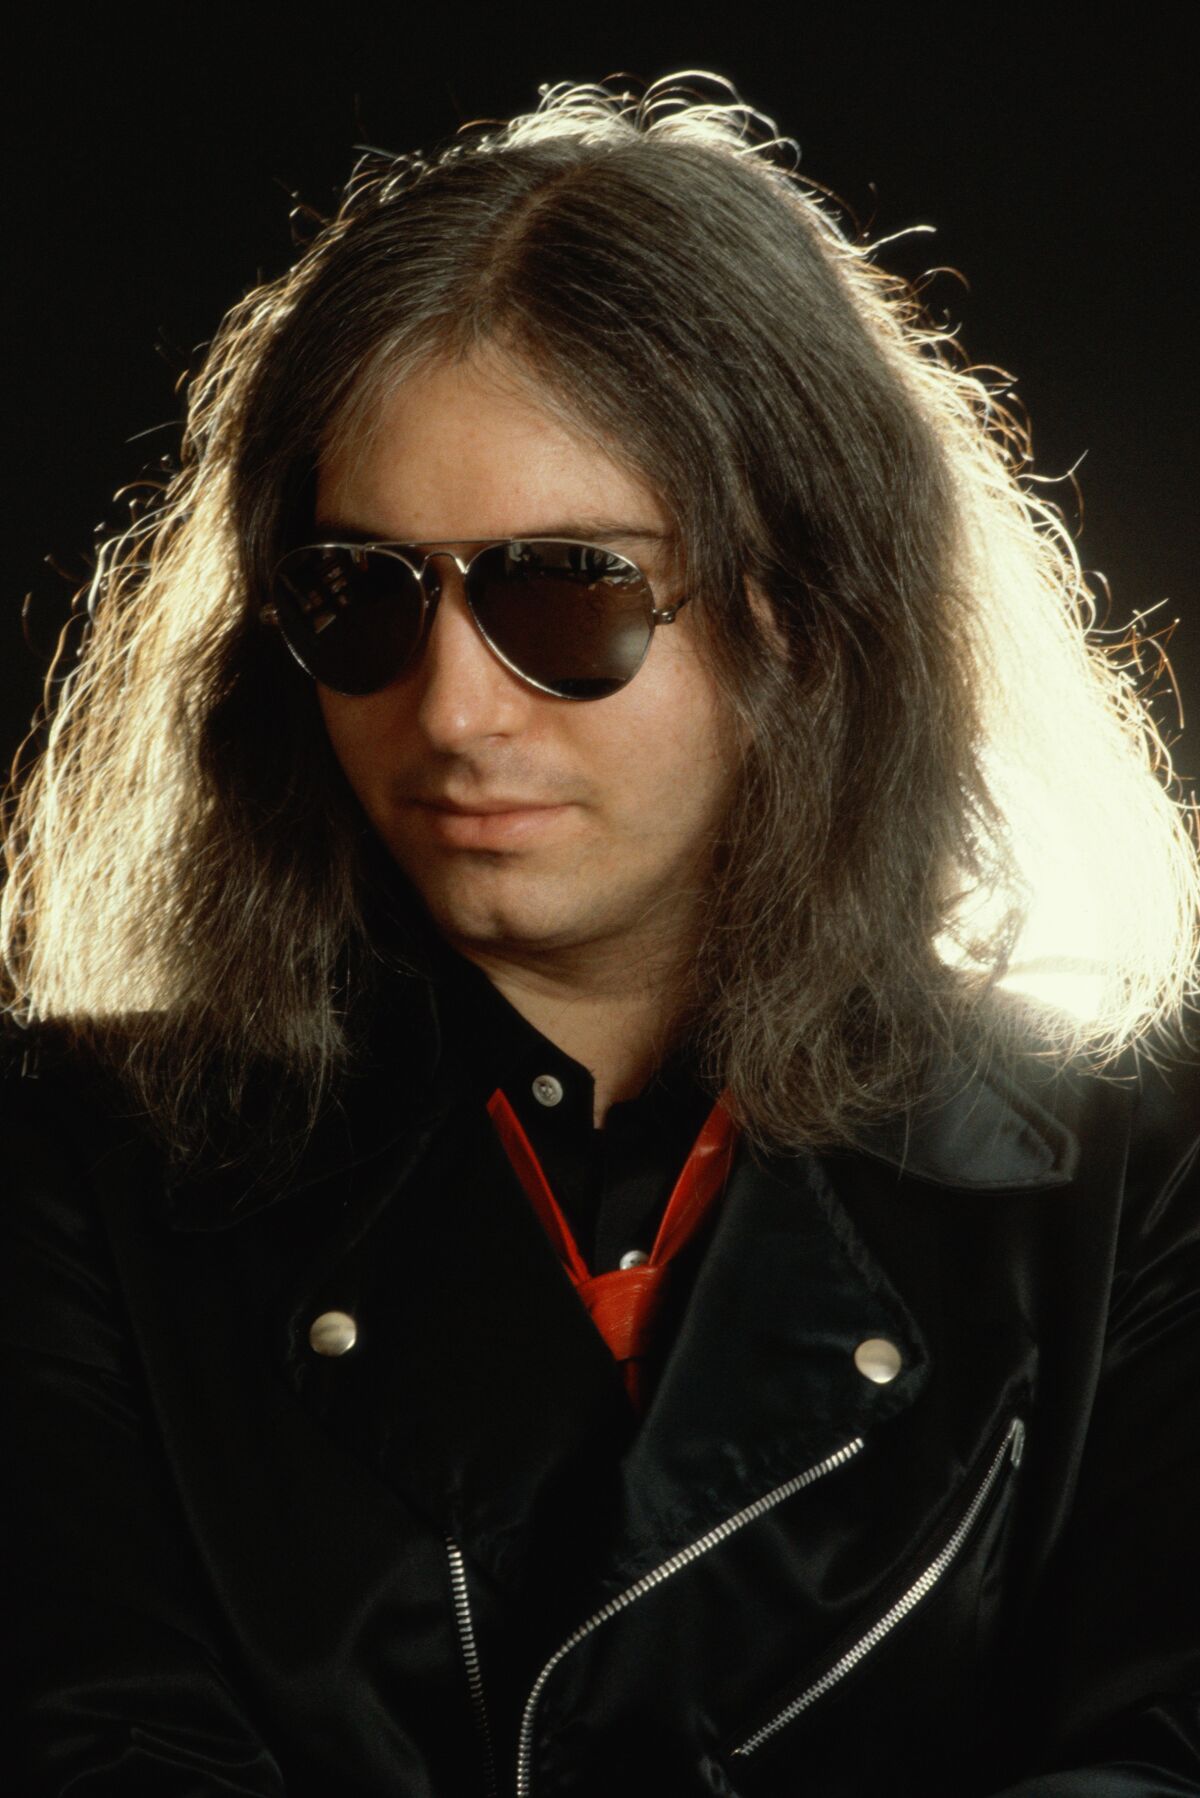 Jim Steinman in sunglasses and long hair.